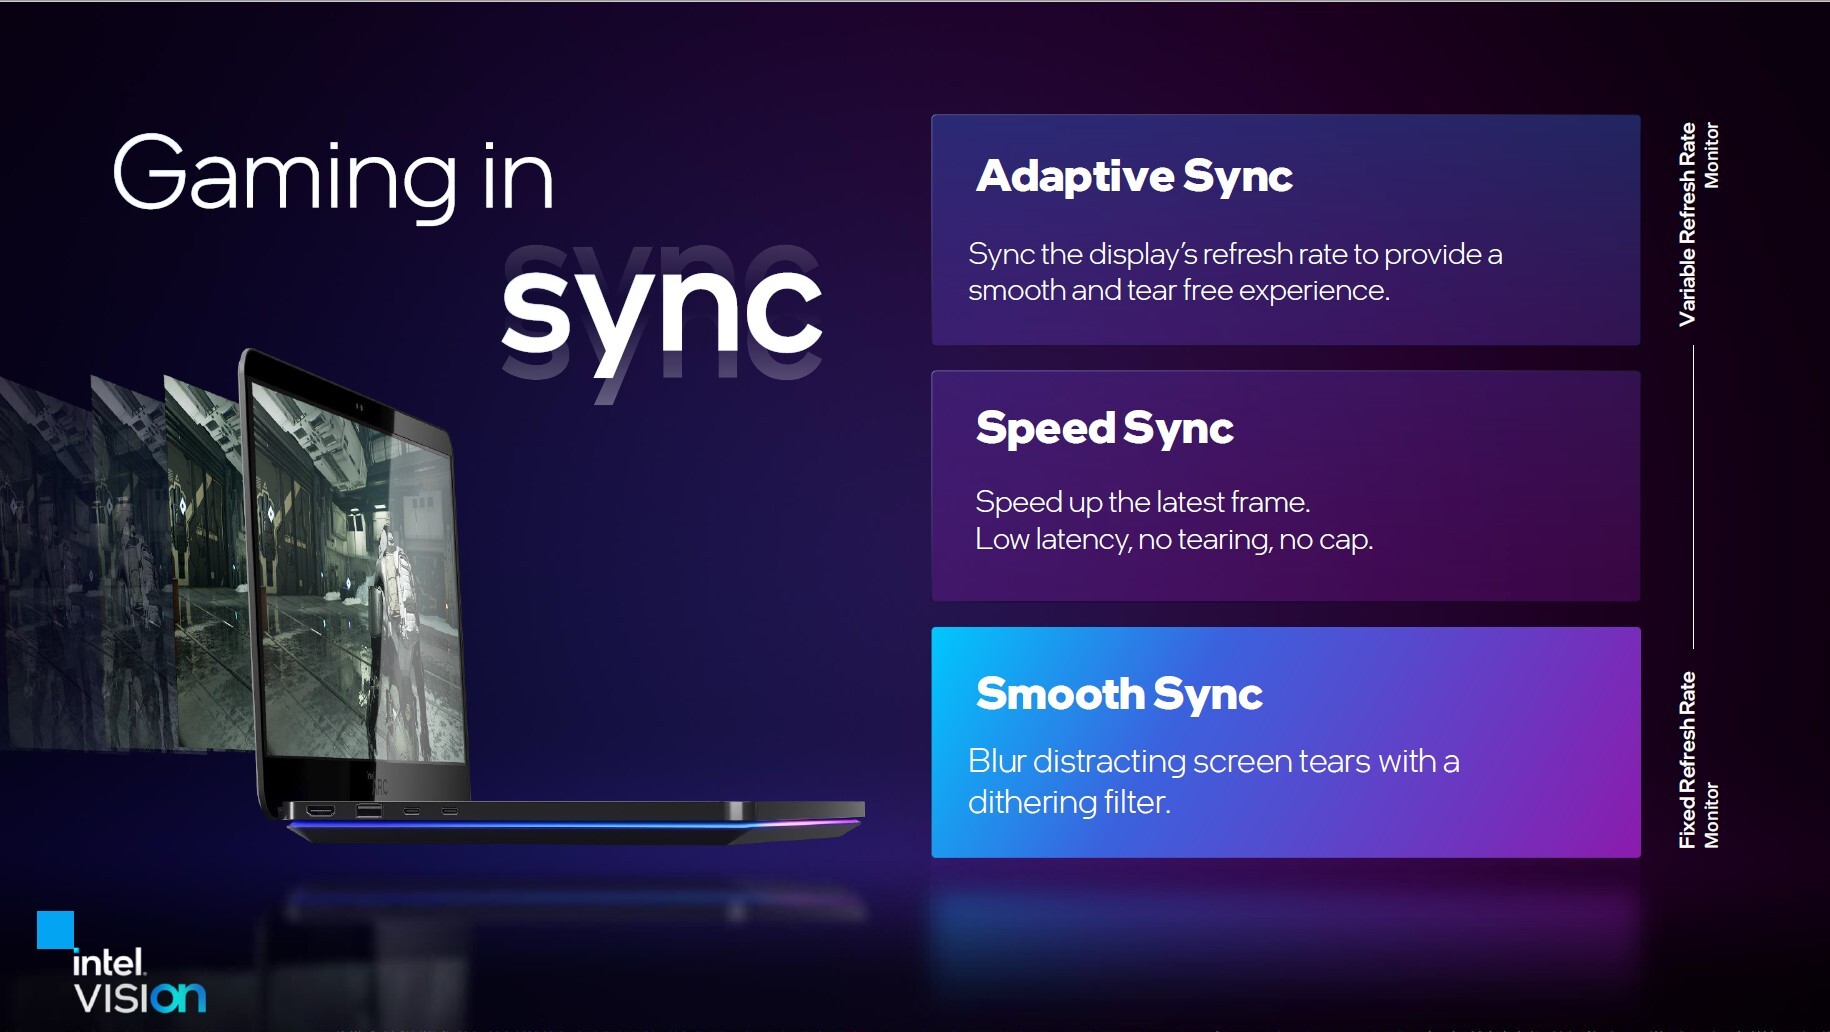 Ulaş Utku Bozdoğan: Intel’den Yeni Teknolojiler: Smooth Sync Ve Speed Sync 1